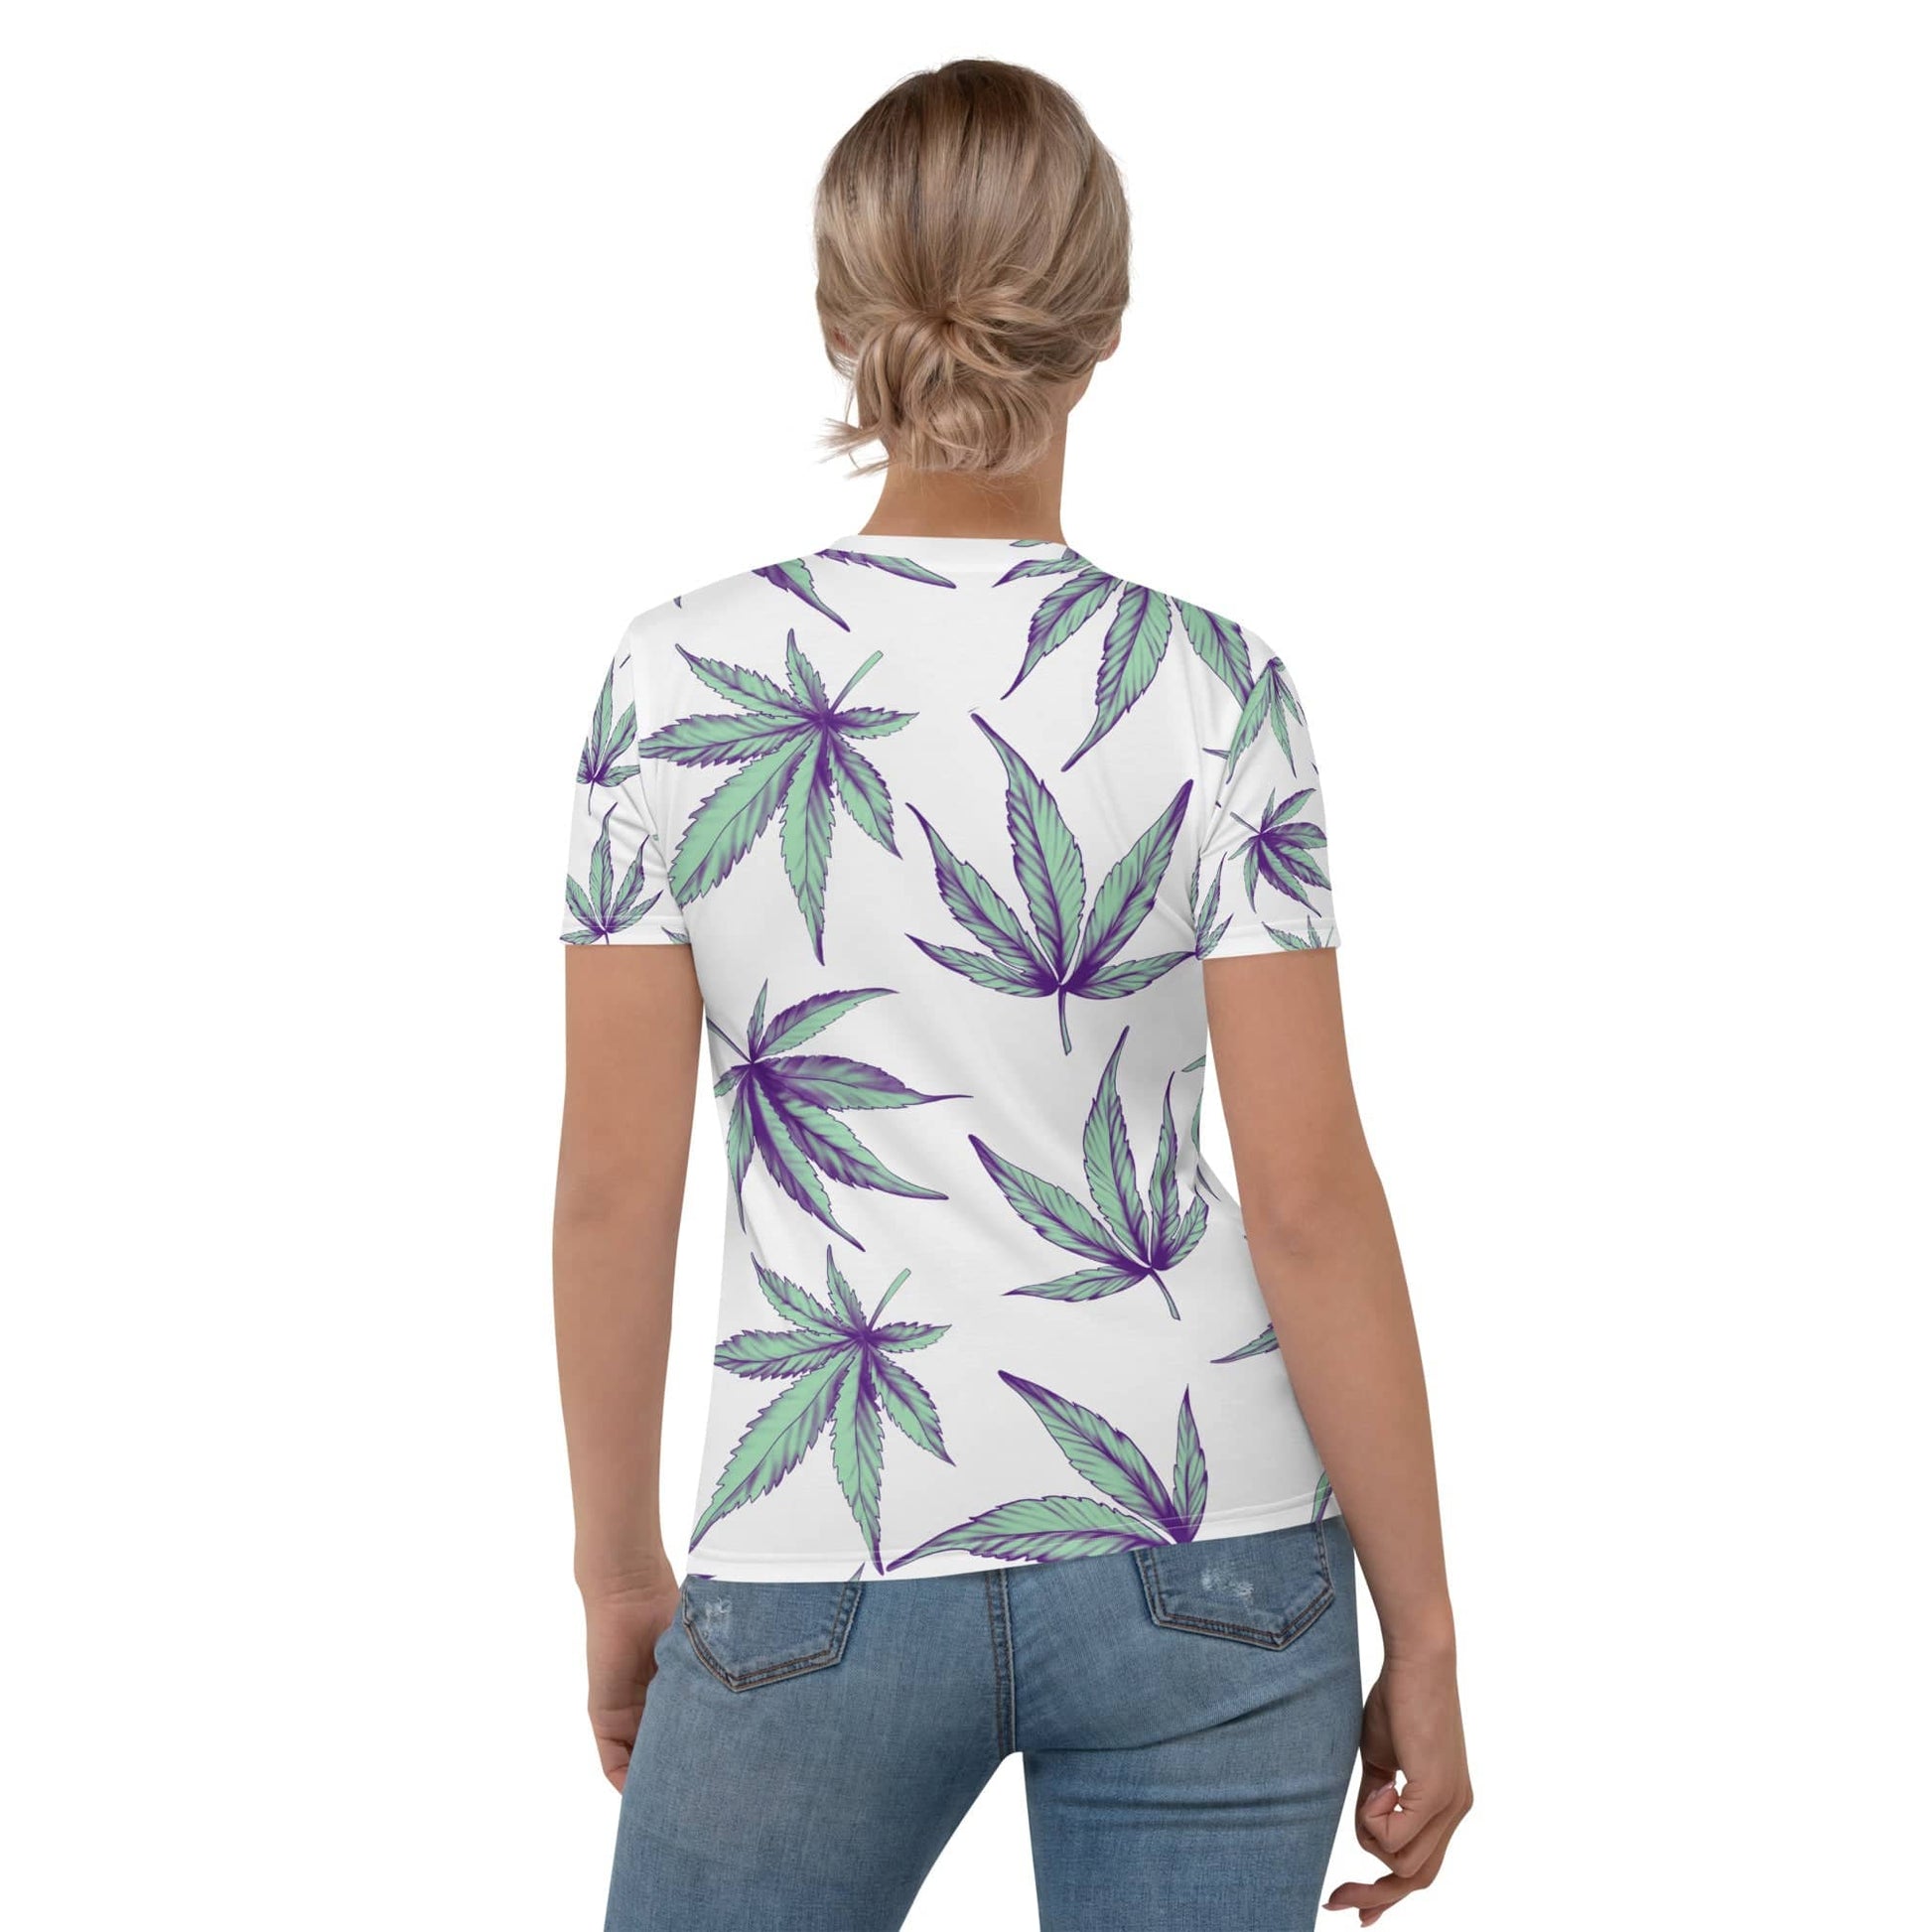 Women's Cannabis Minty Leaf T-shirt - The Cannabis Community